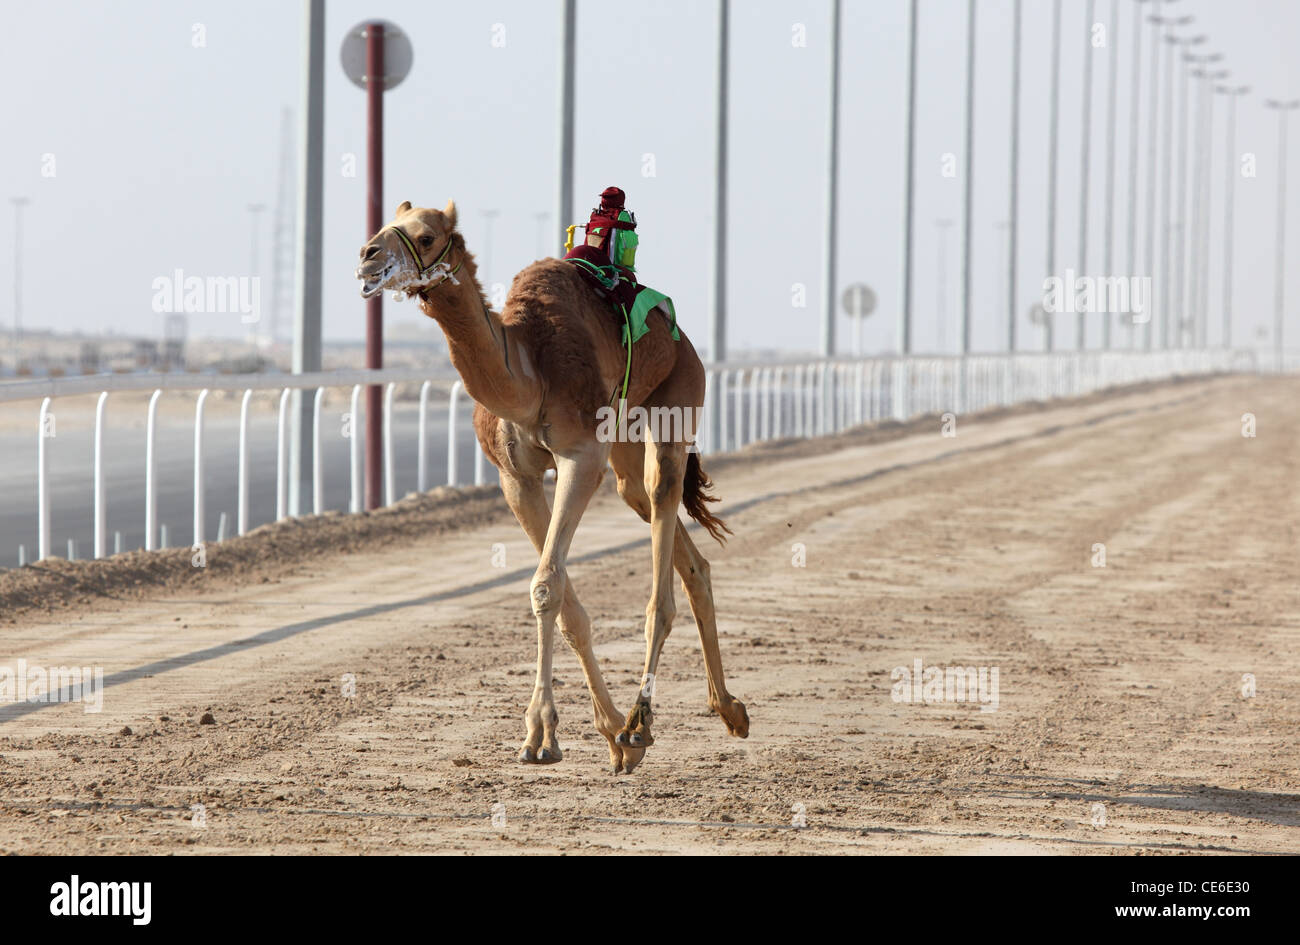 Racing camel with a robot jockey, Doha Qatar Stock Photo